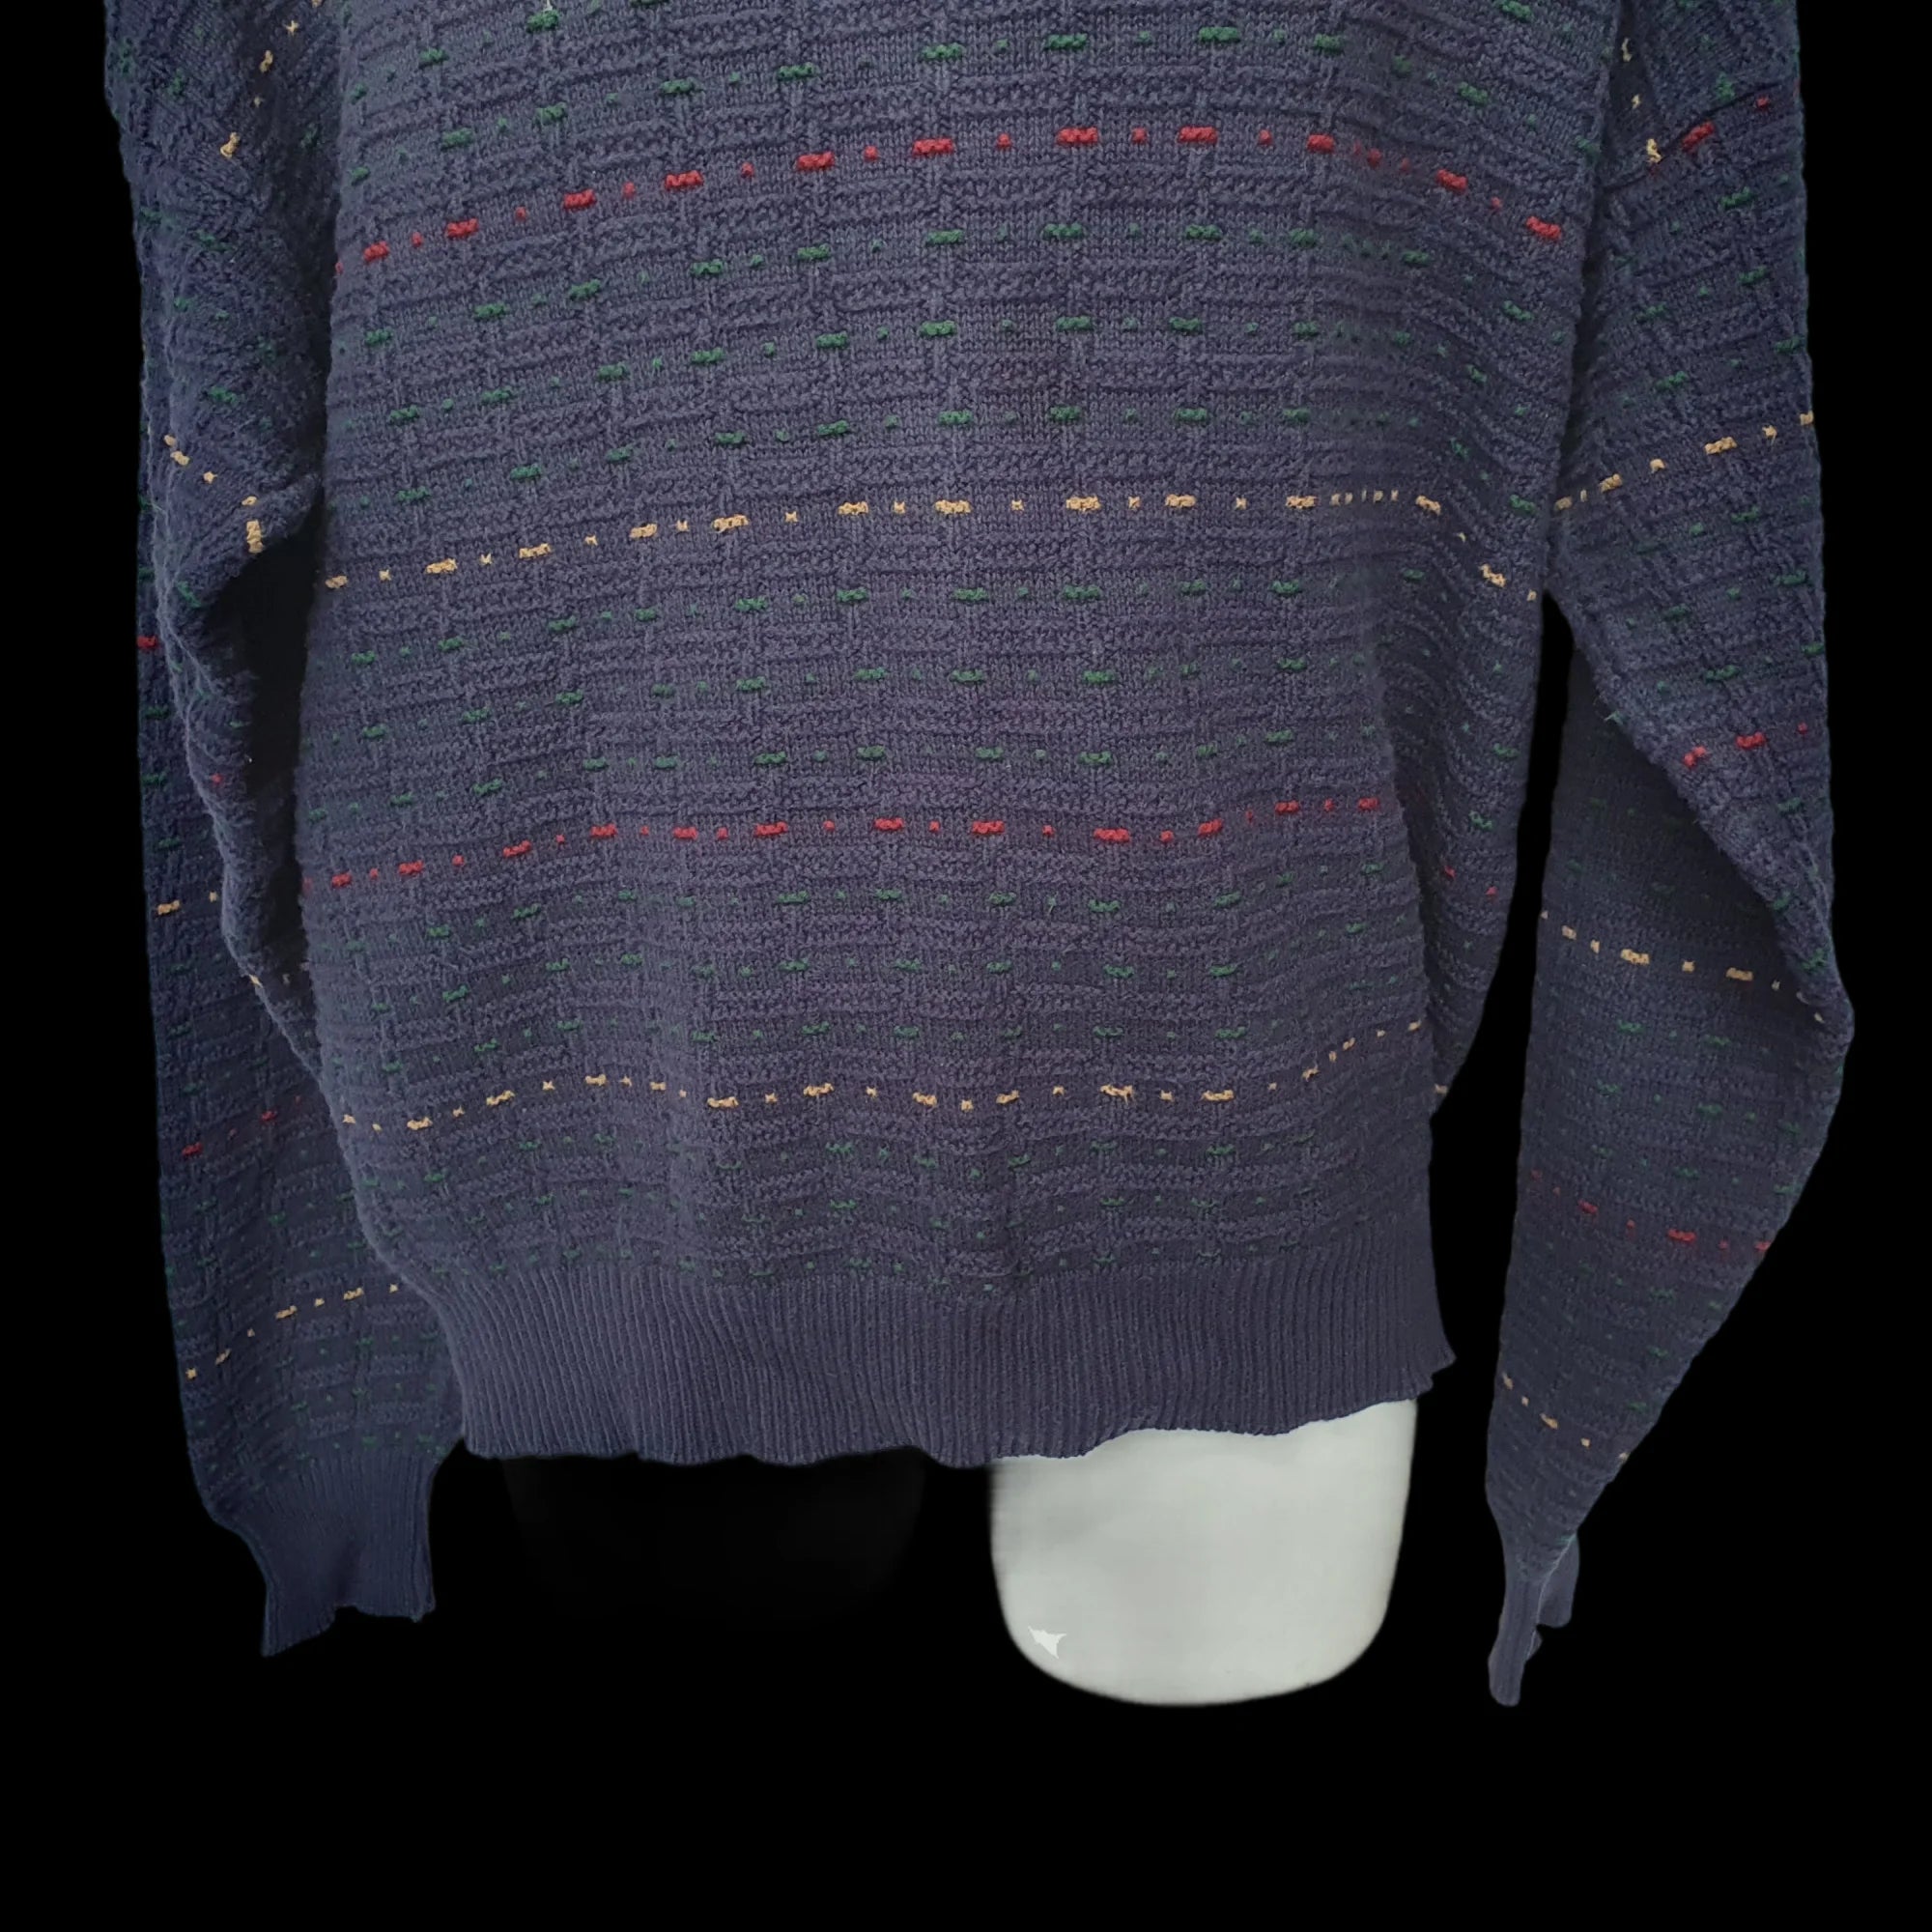 Mens Sedgefield Vintage Jumper Funky Pattern Knitwear XL